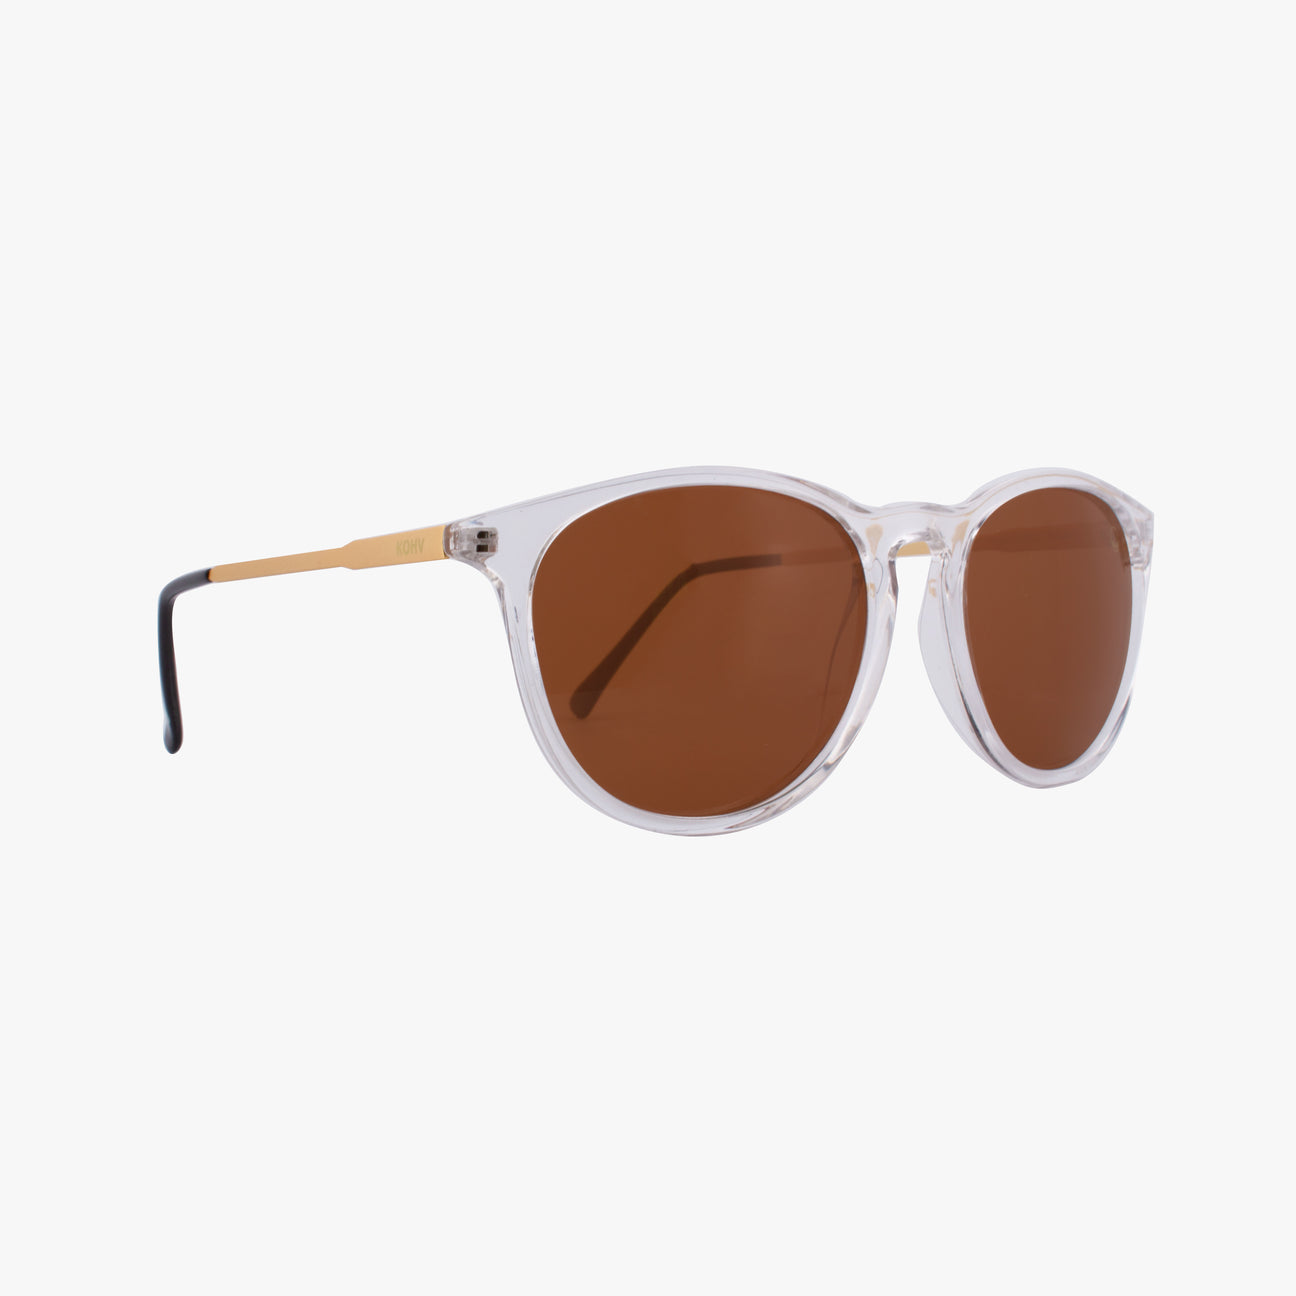 Hale Sunglasses - Polarized